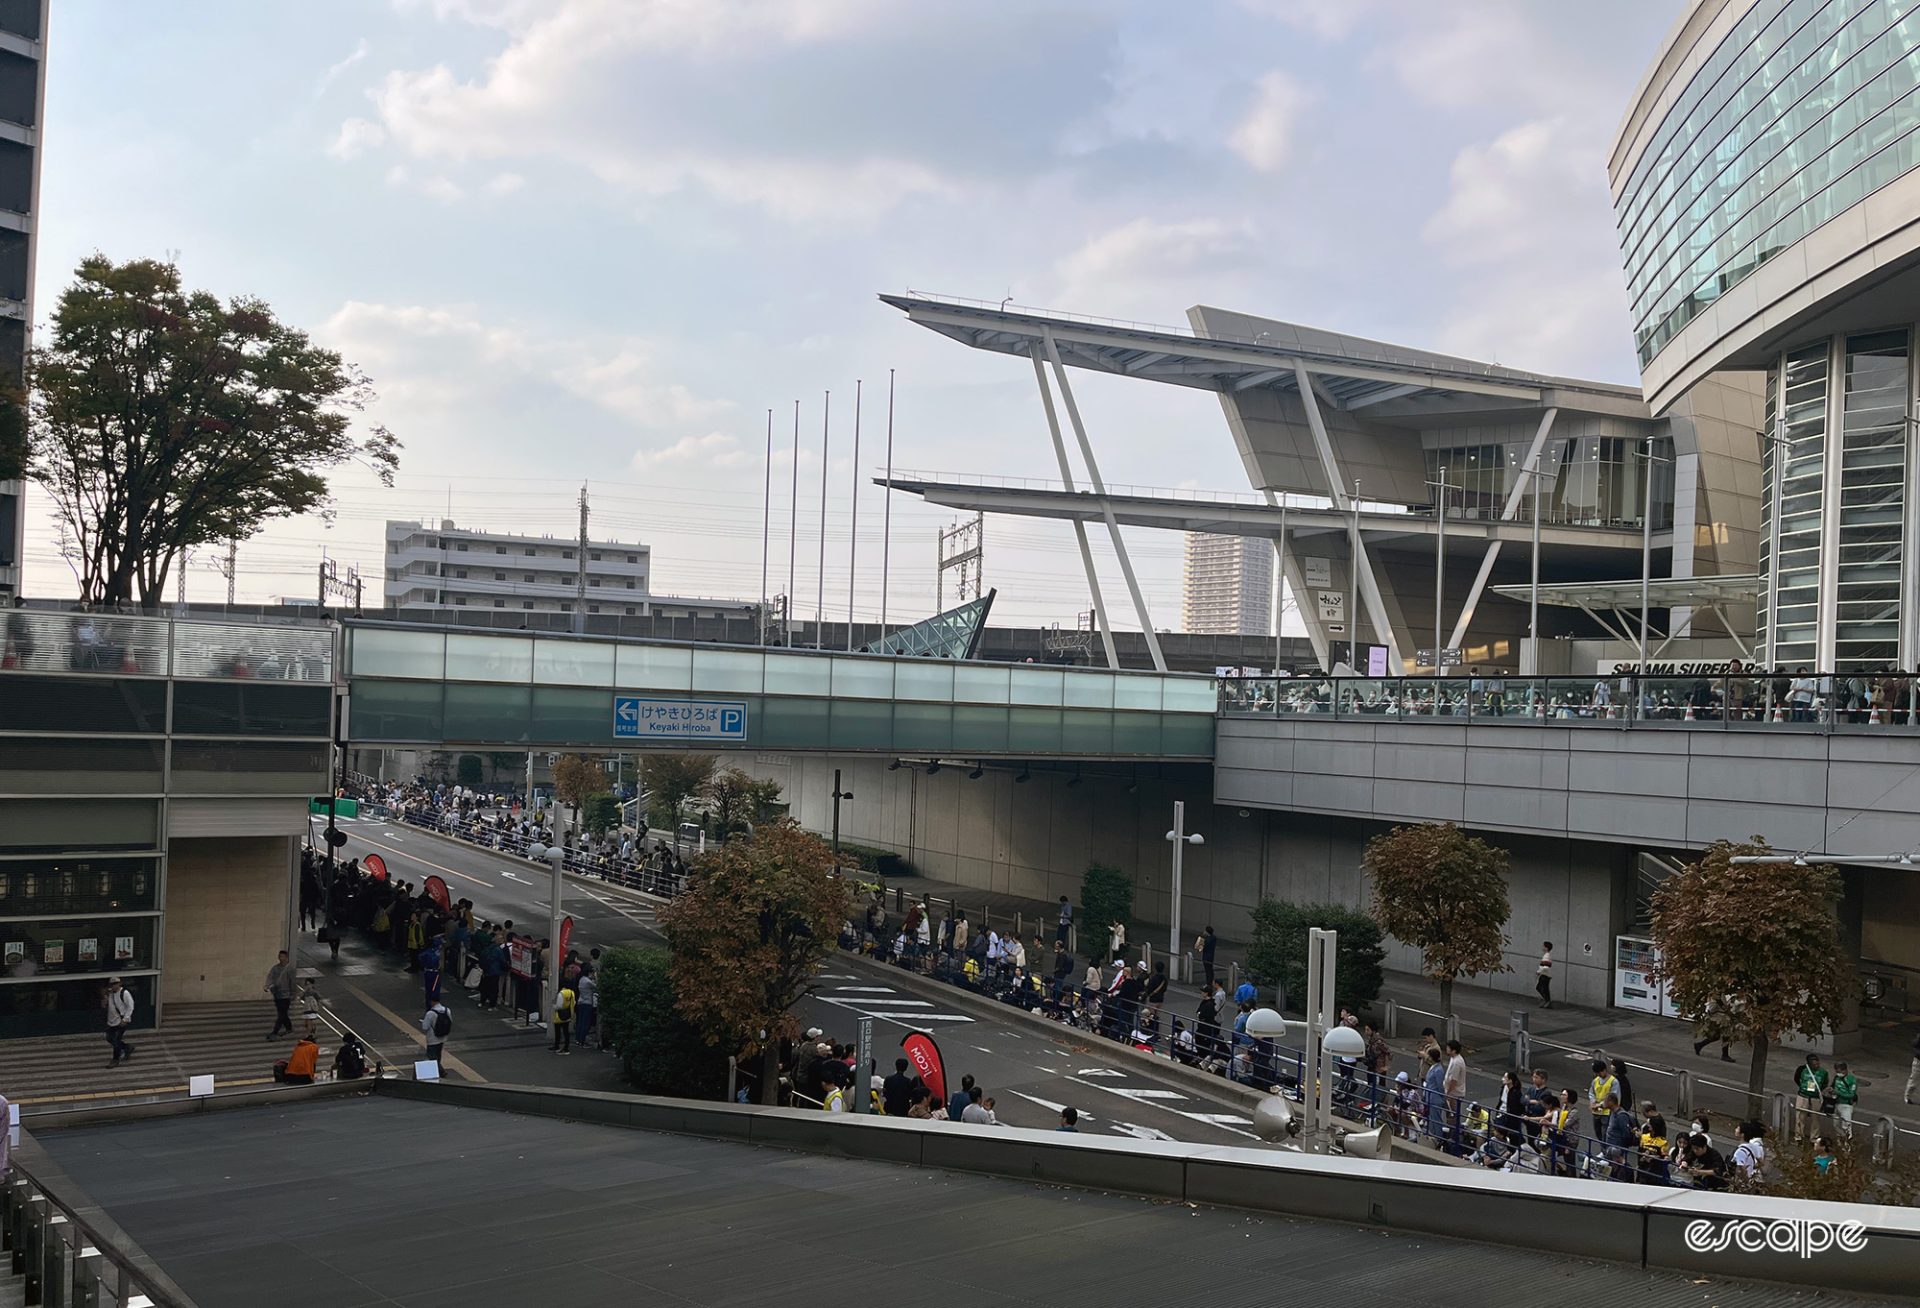 Crowds line the road waiting for the Saitama Criterium below the Saitama Super Arena.